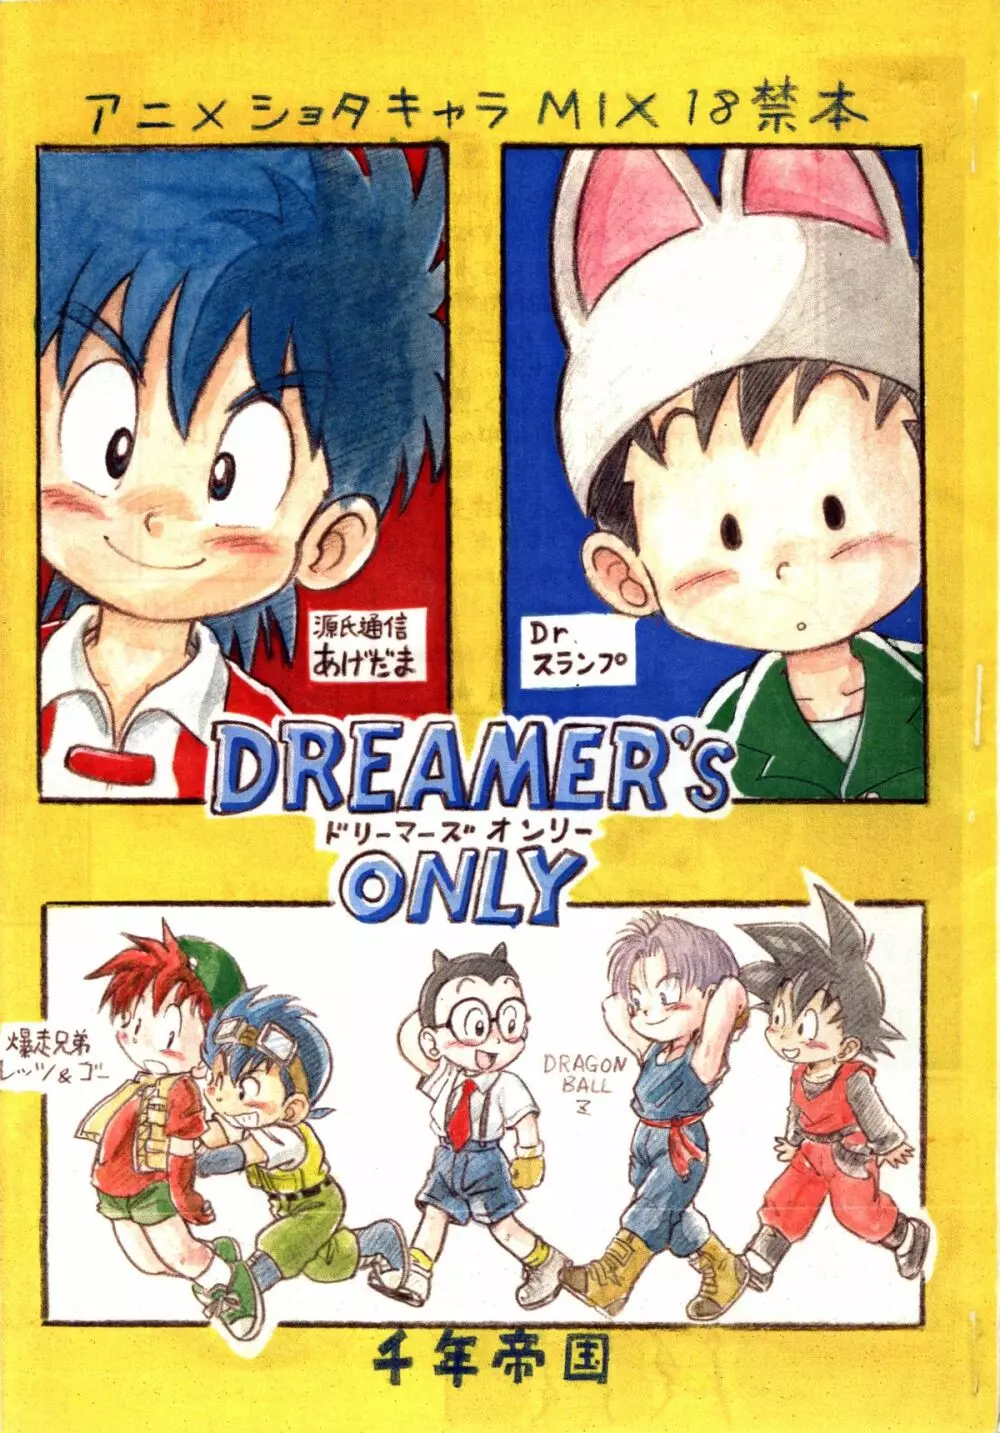 Mitsui Jun – Dreamer’s Only – Anime Shota Character Mix